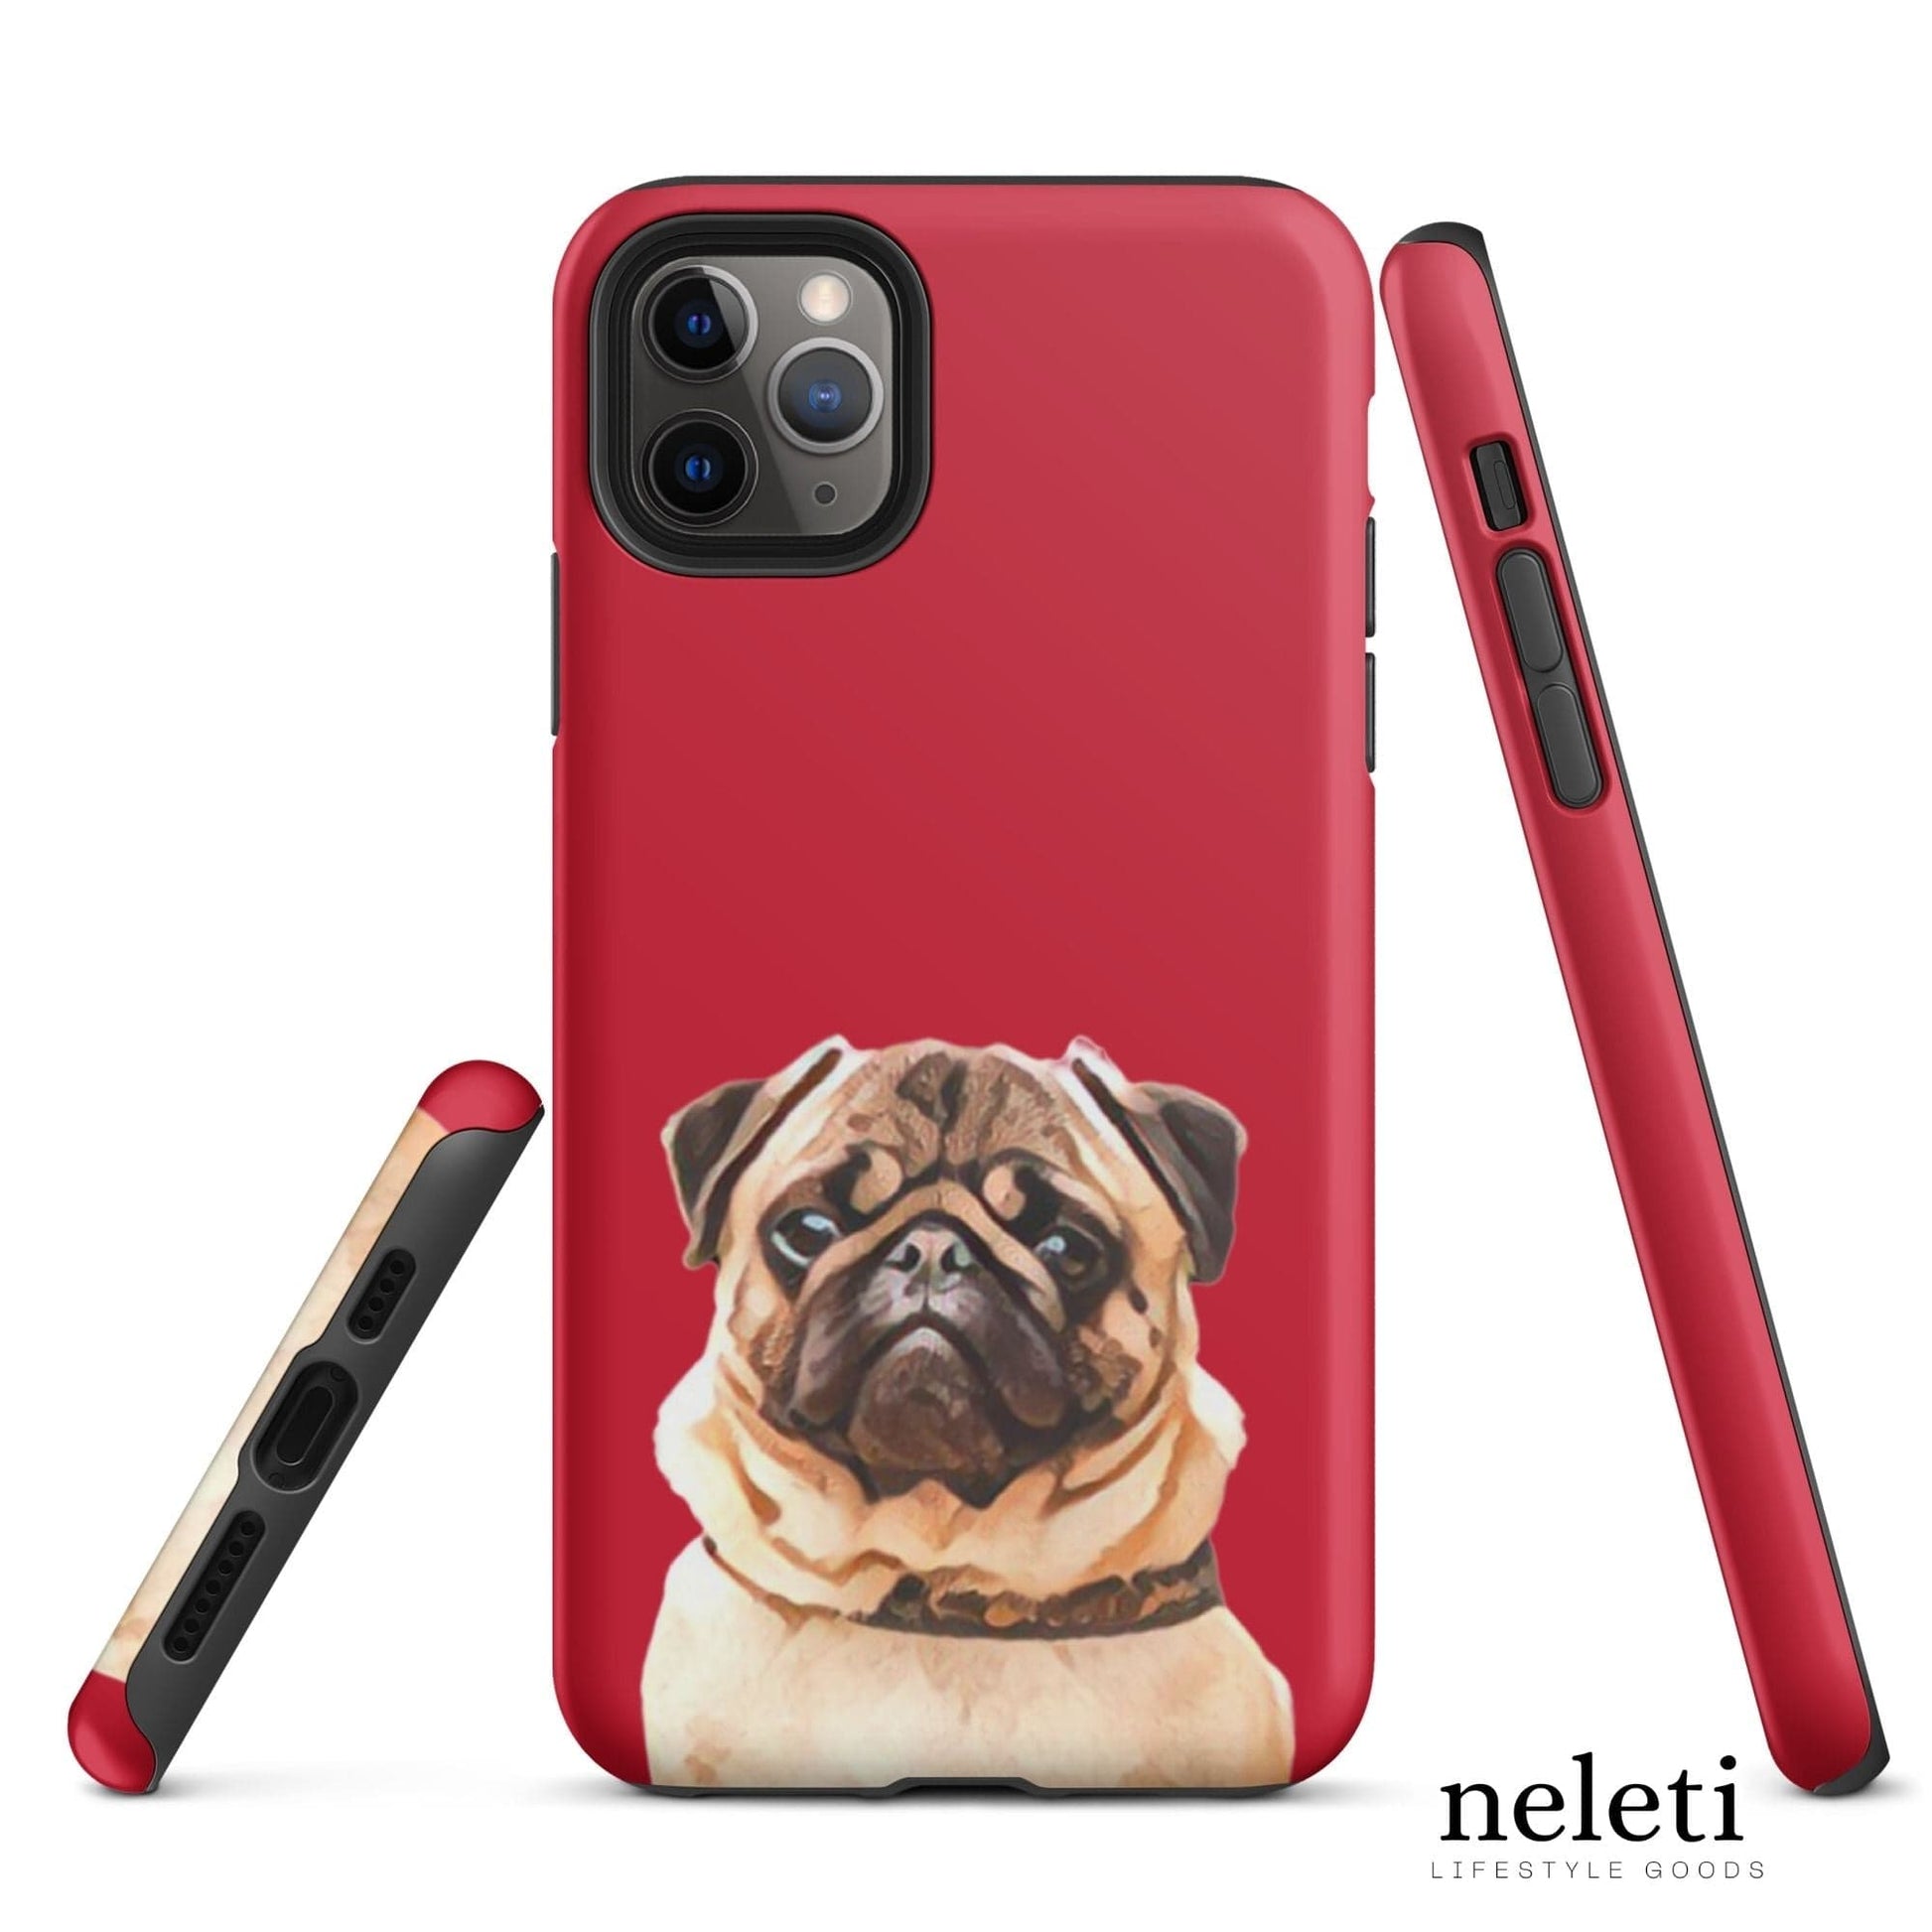 neleti phone case Dog Phone Case, Cat Phone Case, Custom Phone Case